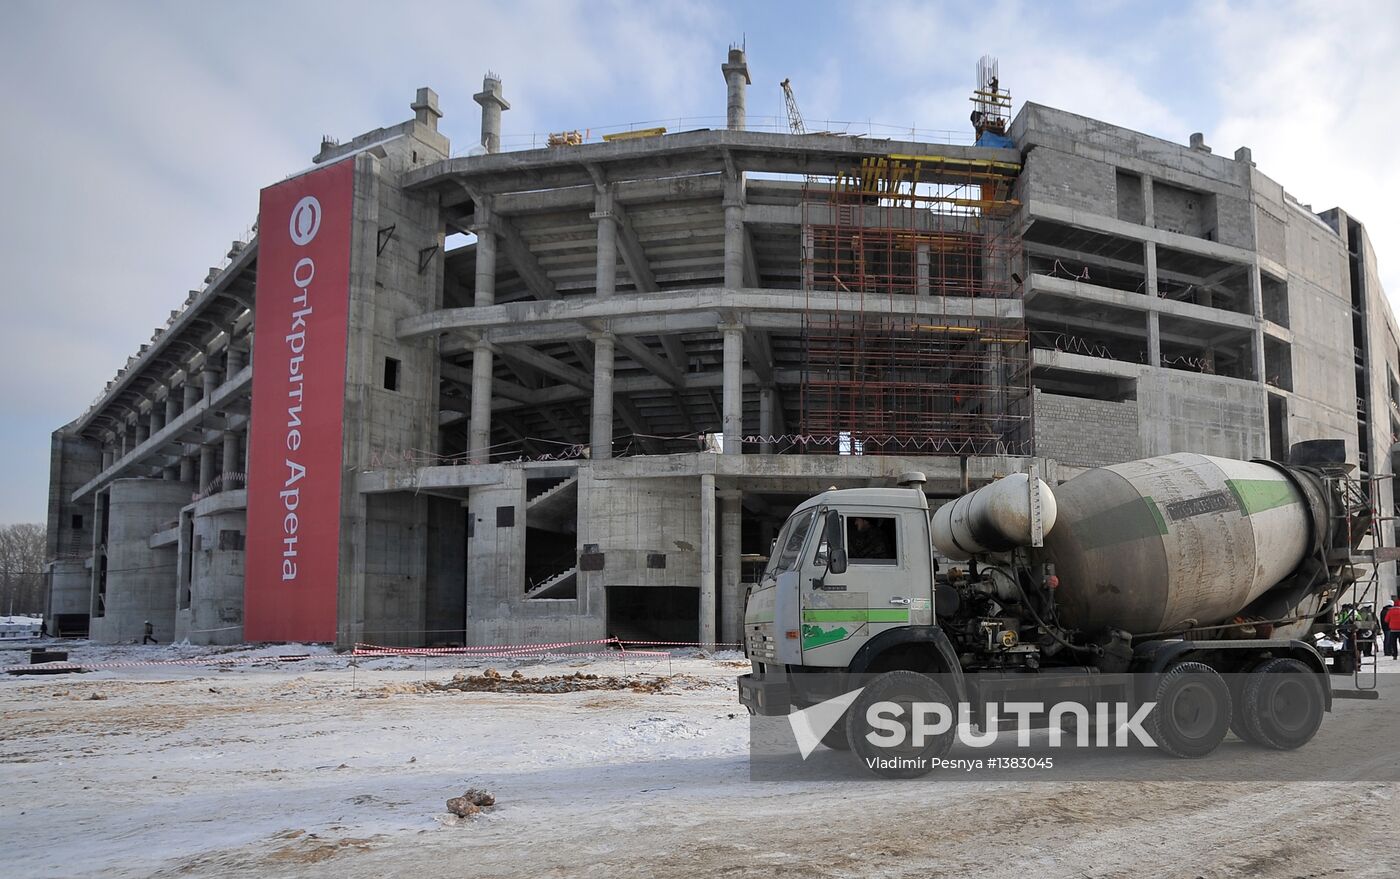 FC Spartak names it's new stadium as Otkritie-Arena